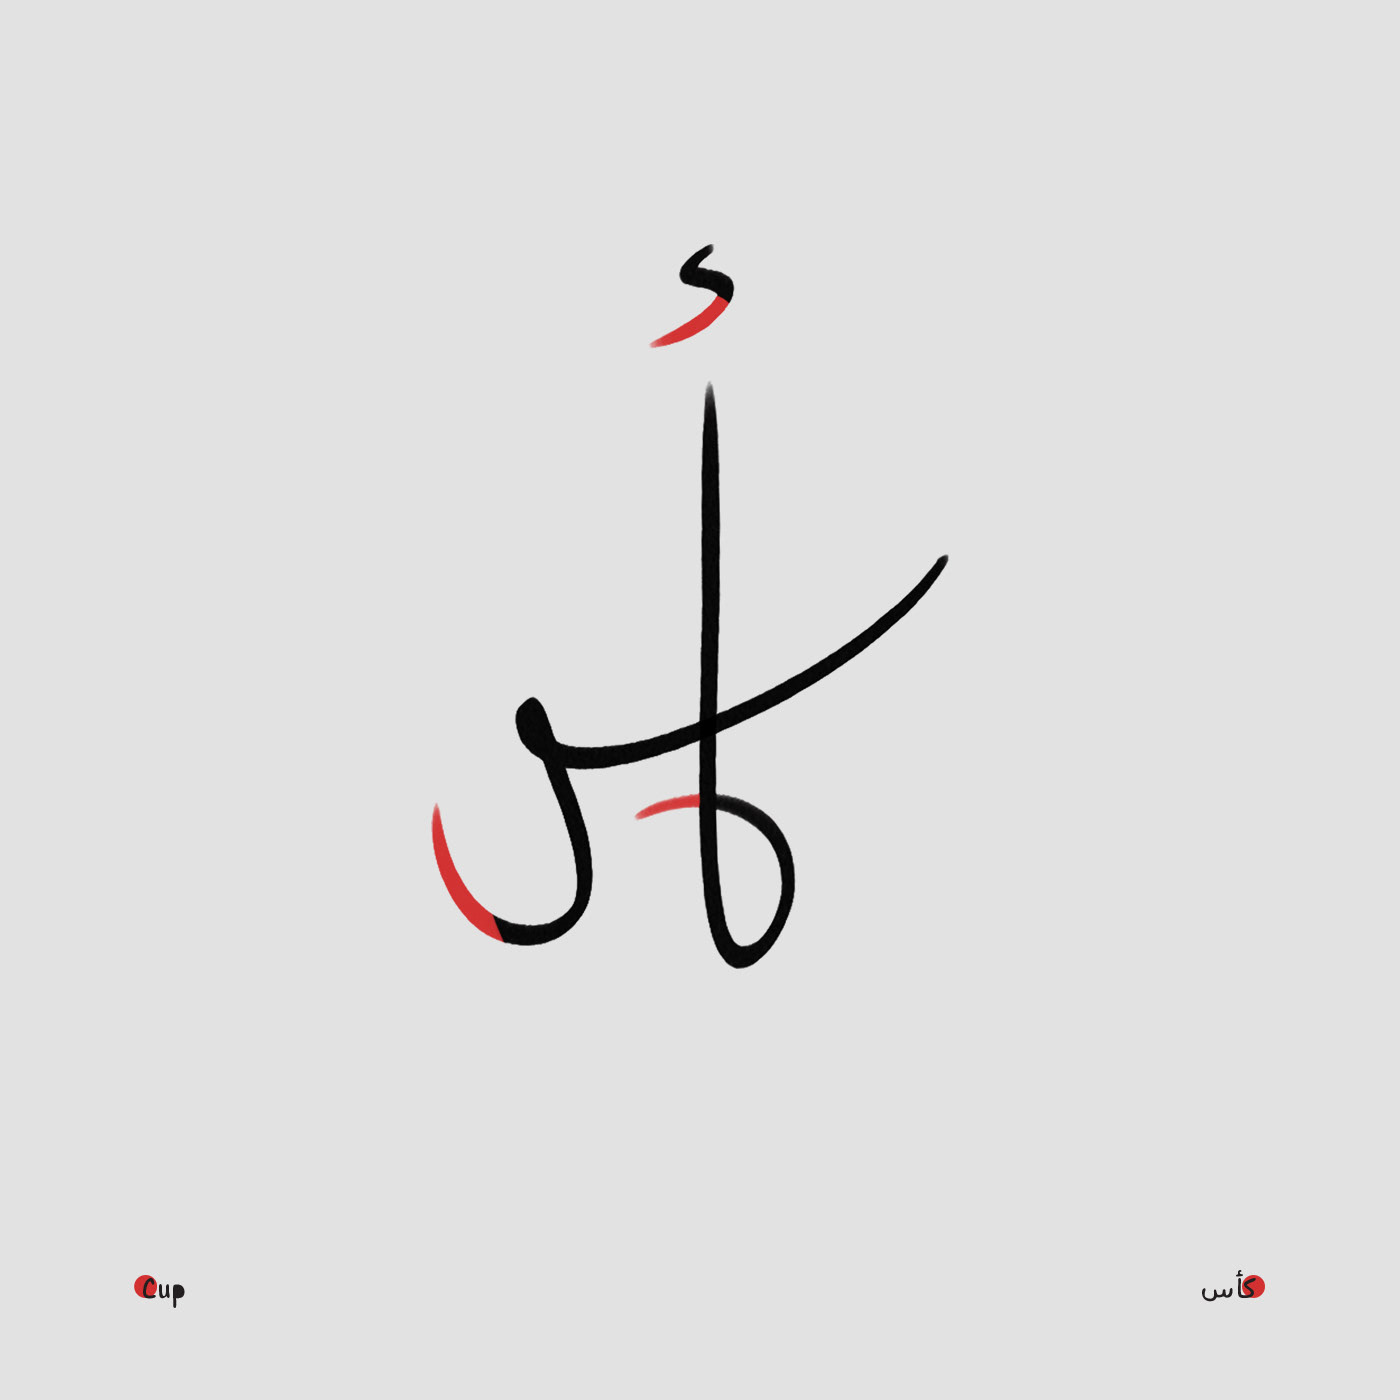 arabic calligraphy arabic typography Calligraphy   font Handlettering hibrayer islamic art Logotype type experiments typography  